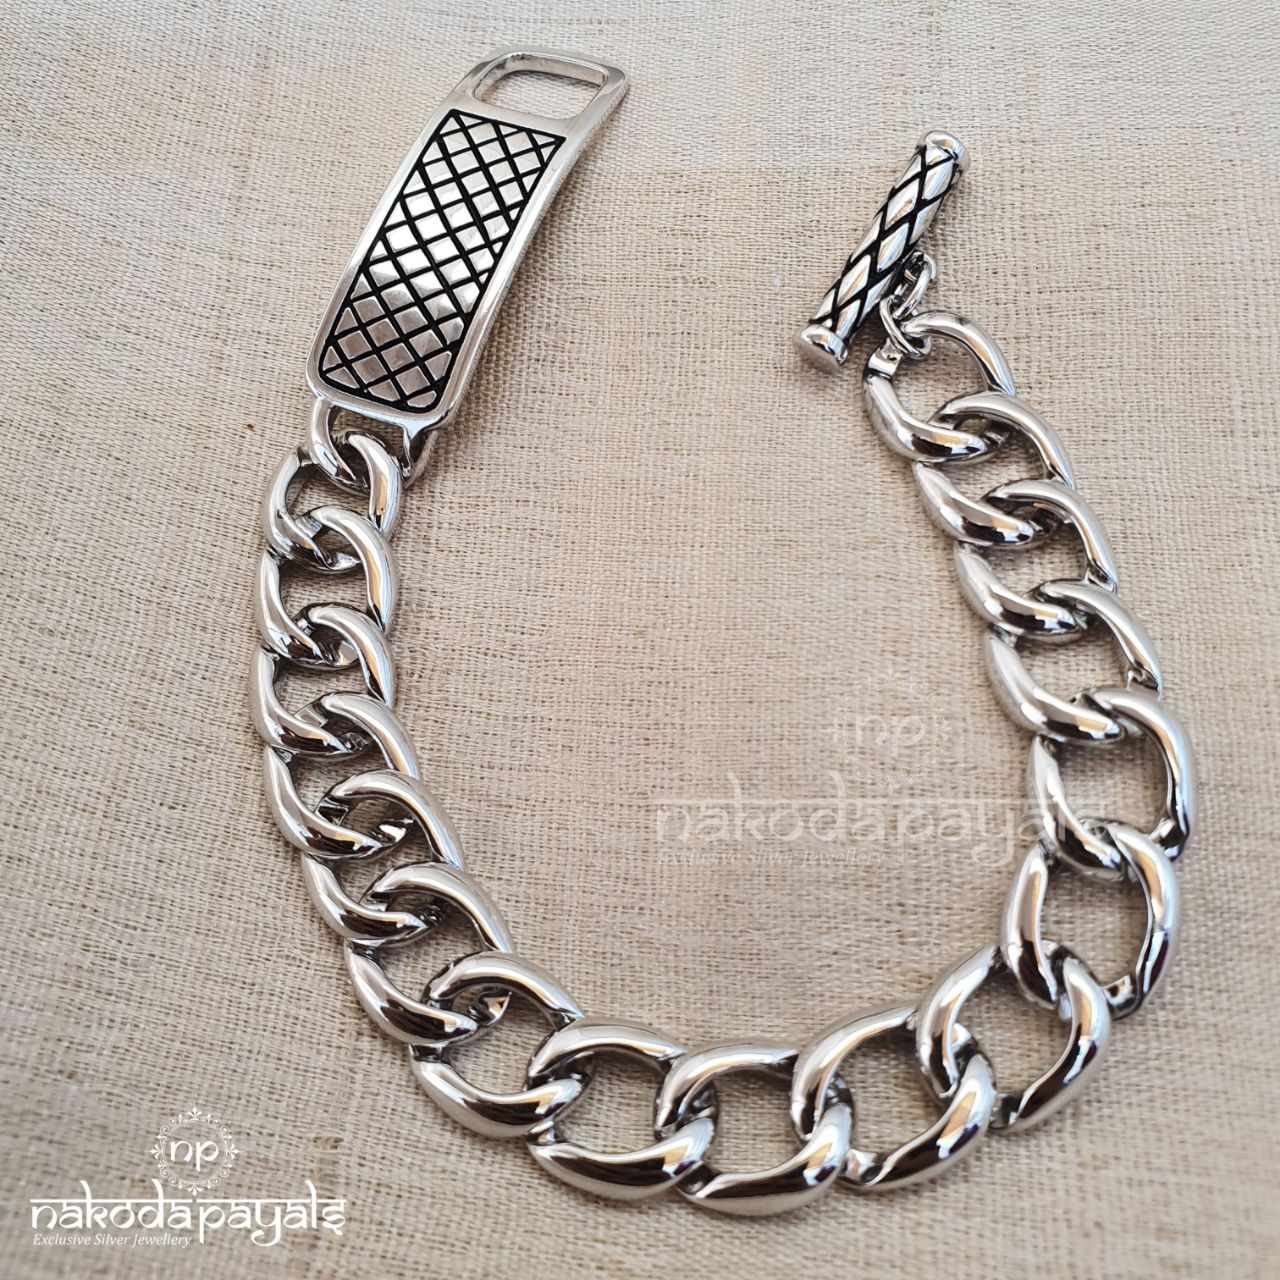 Masculine Link Chain Bracelet